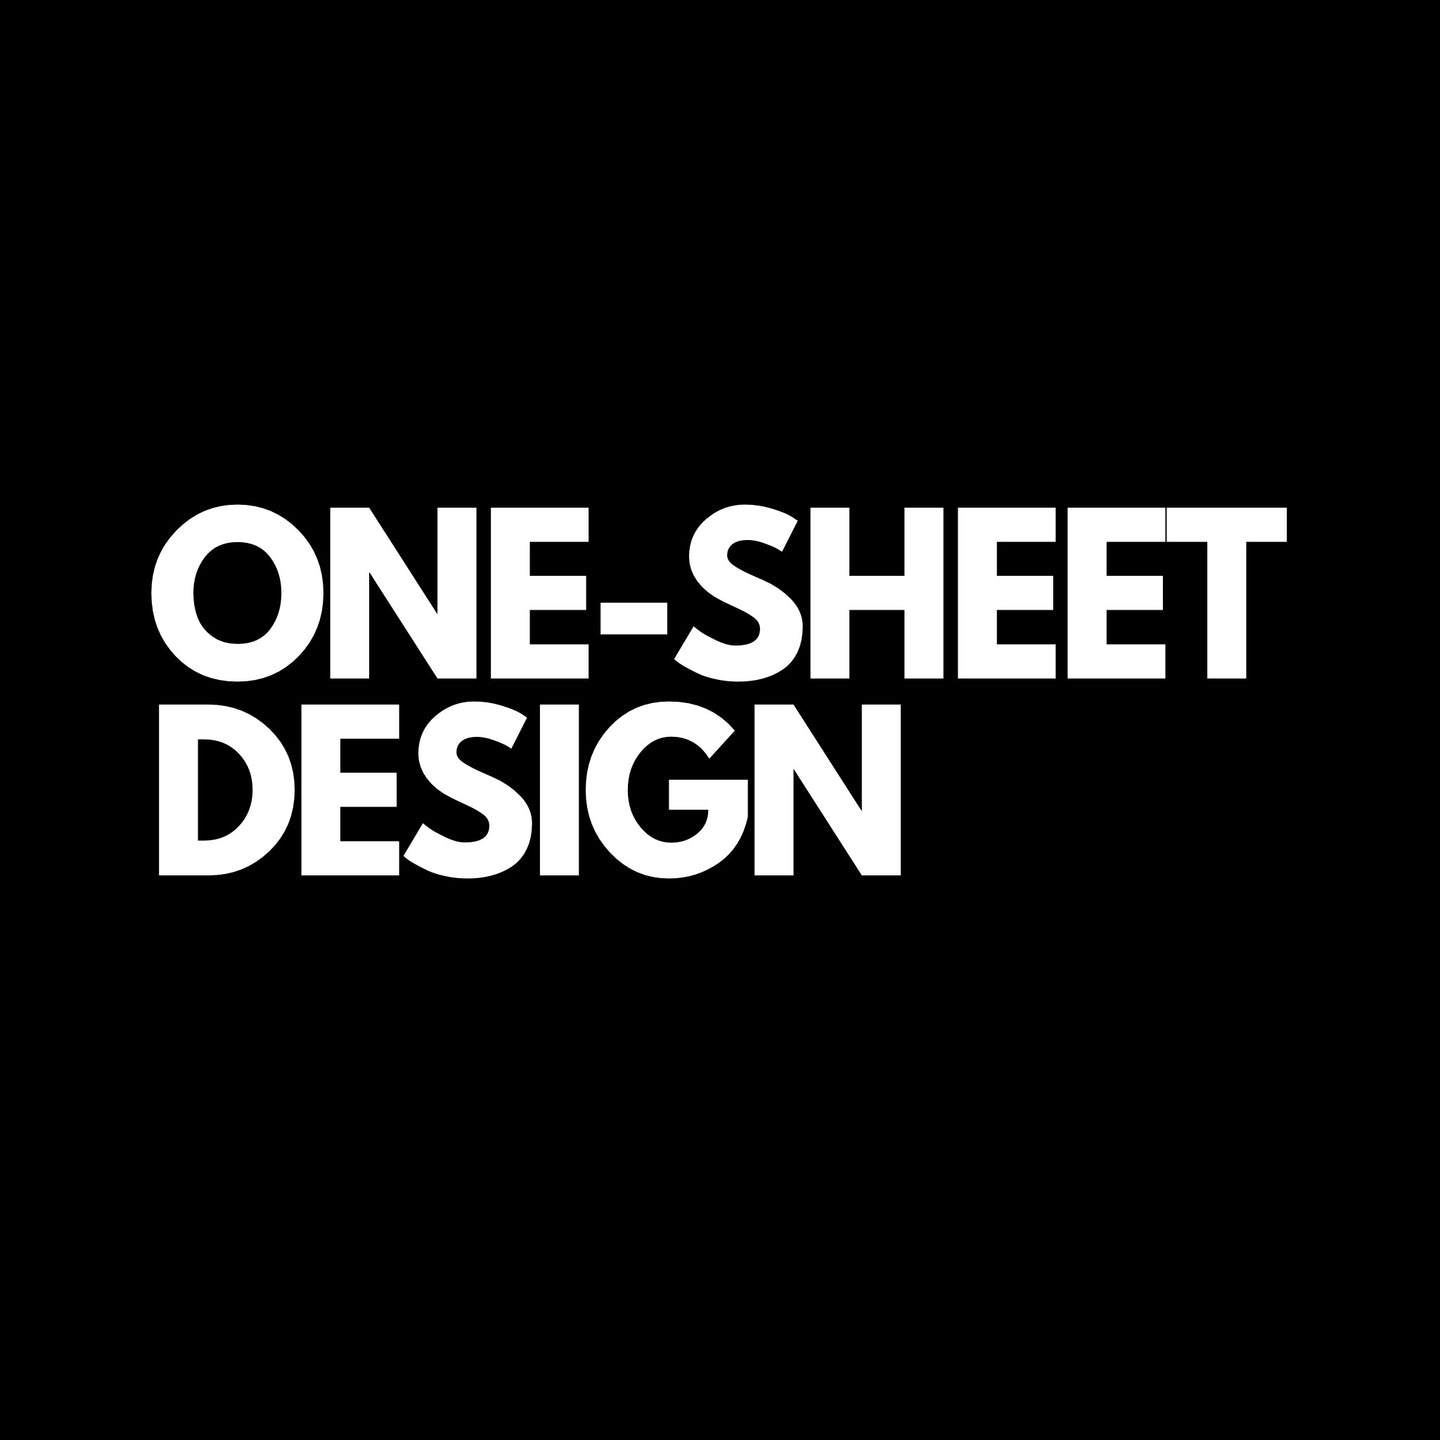 One-Sheet Design